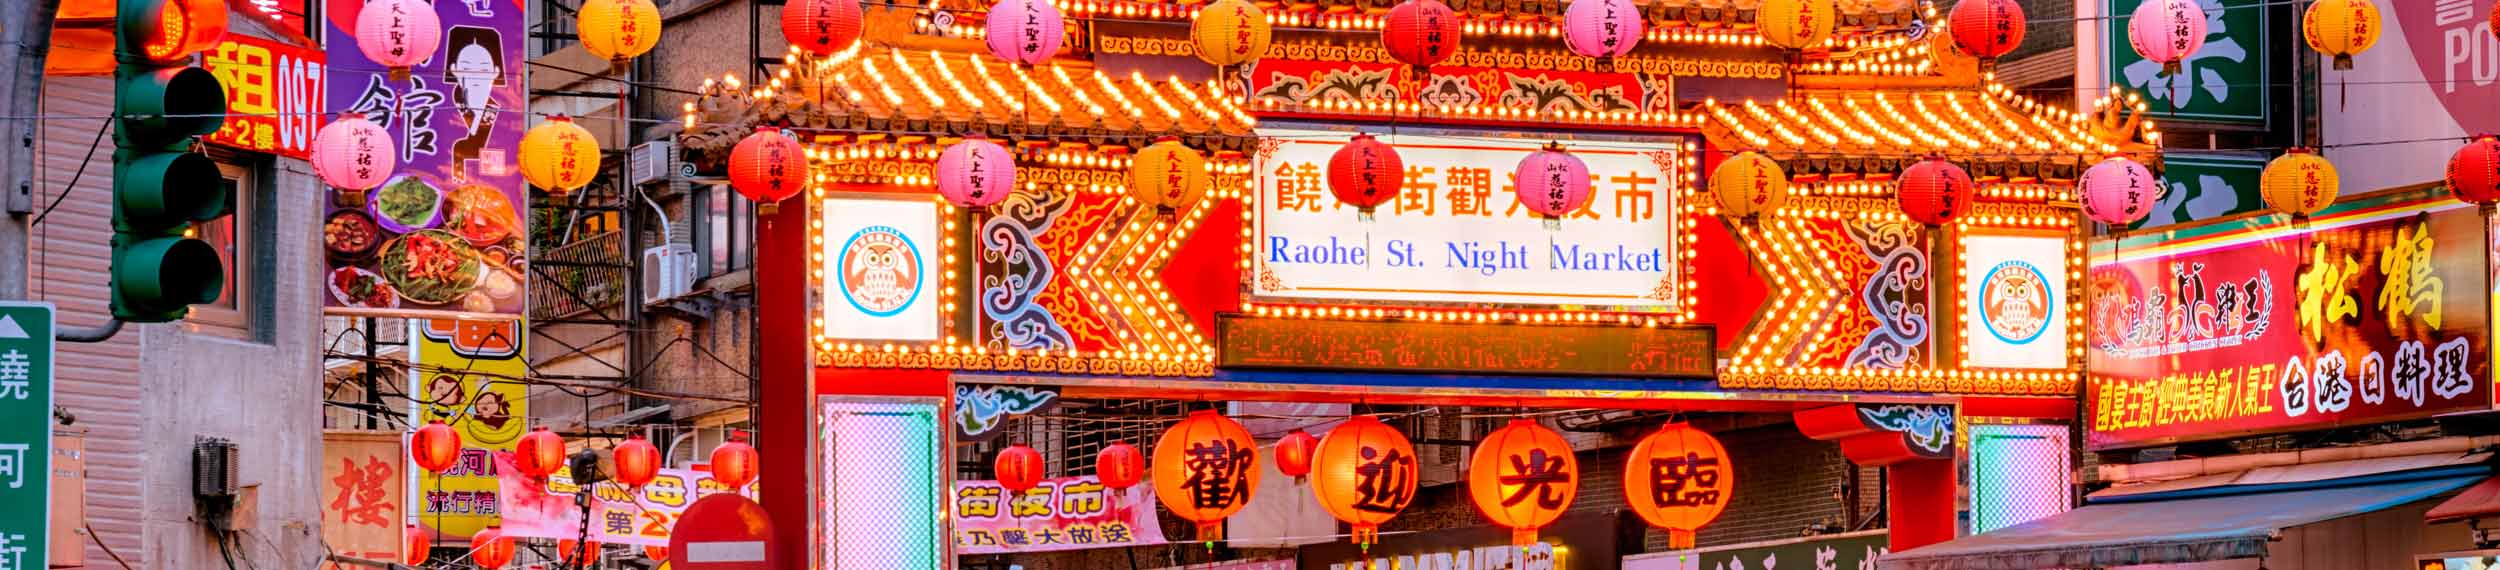 Entrance of Raohe Street Night Market in Taipei, Taiwan. 